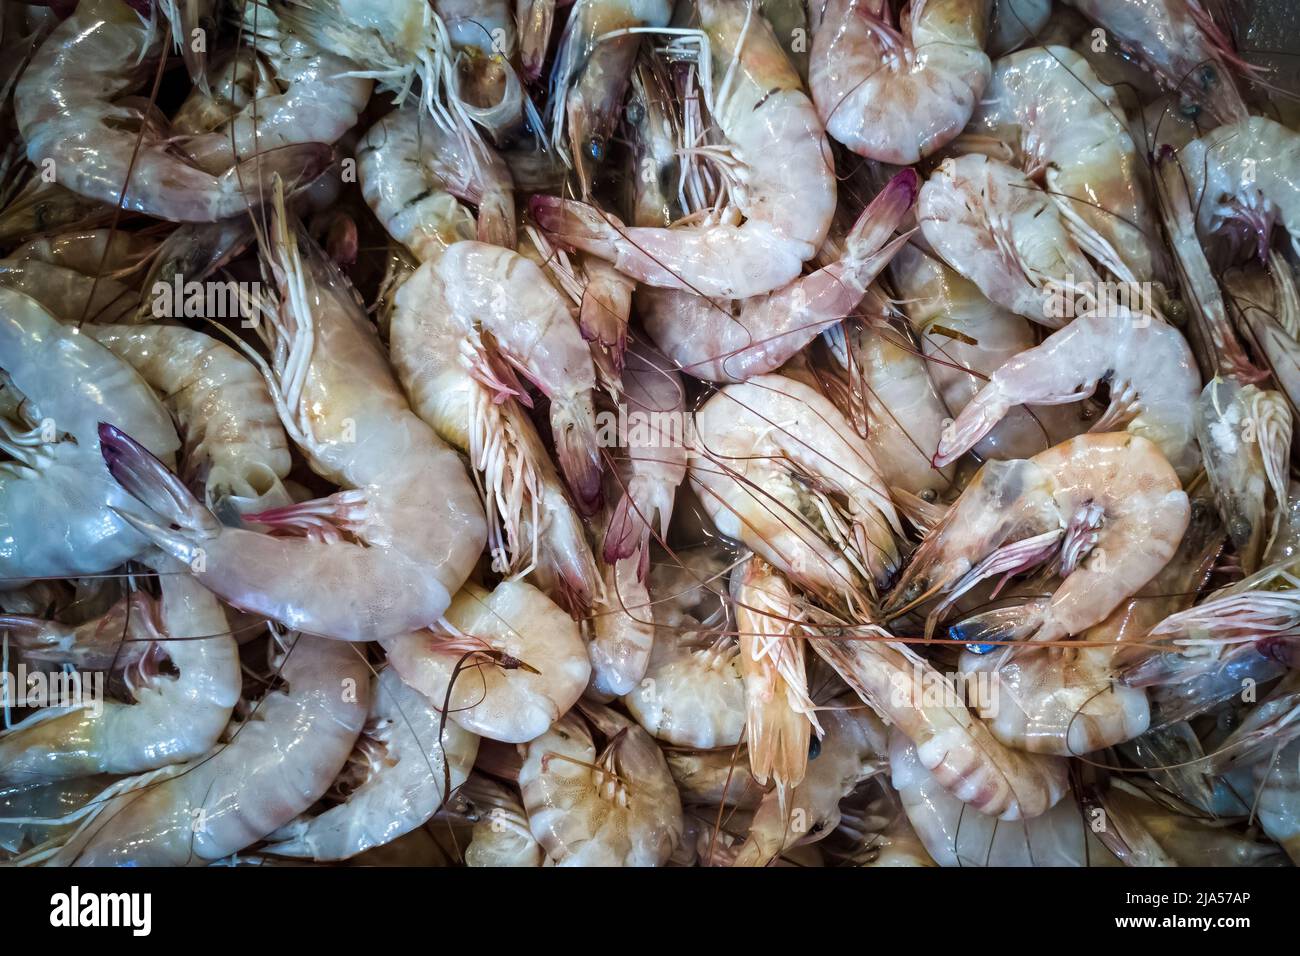 Fish Market in Dammam, Saudi Arabia. Stock Photo